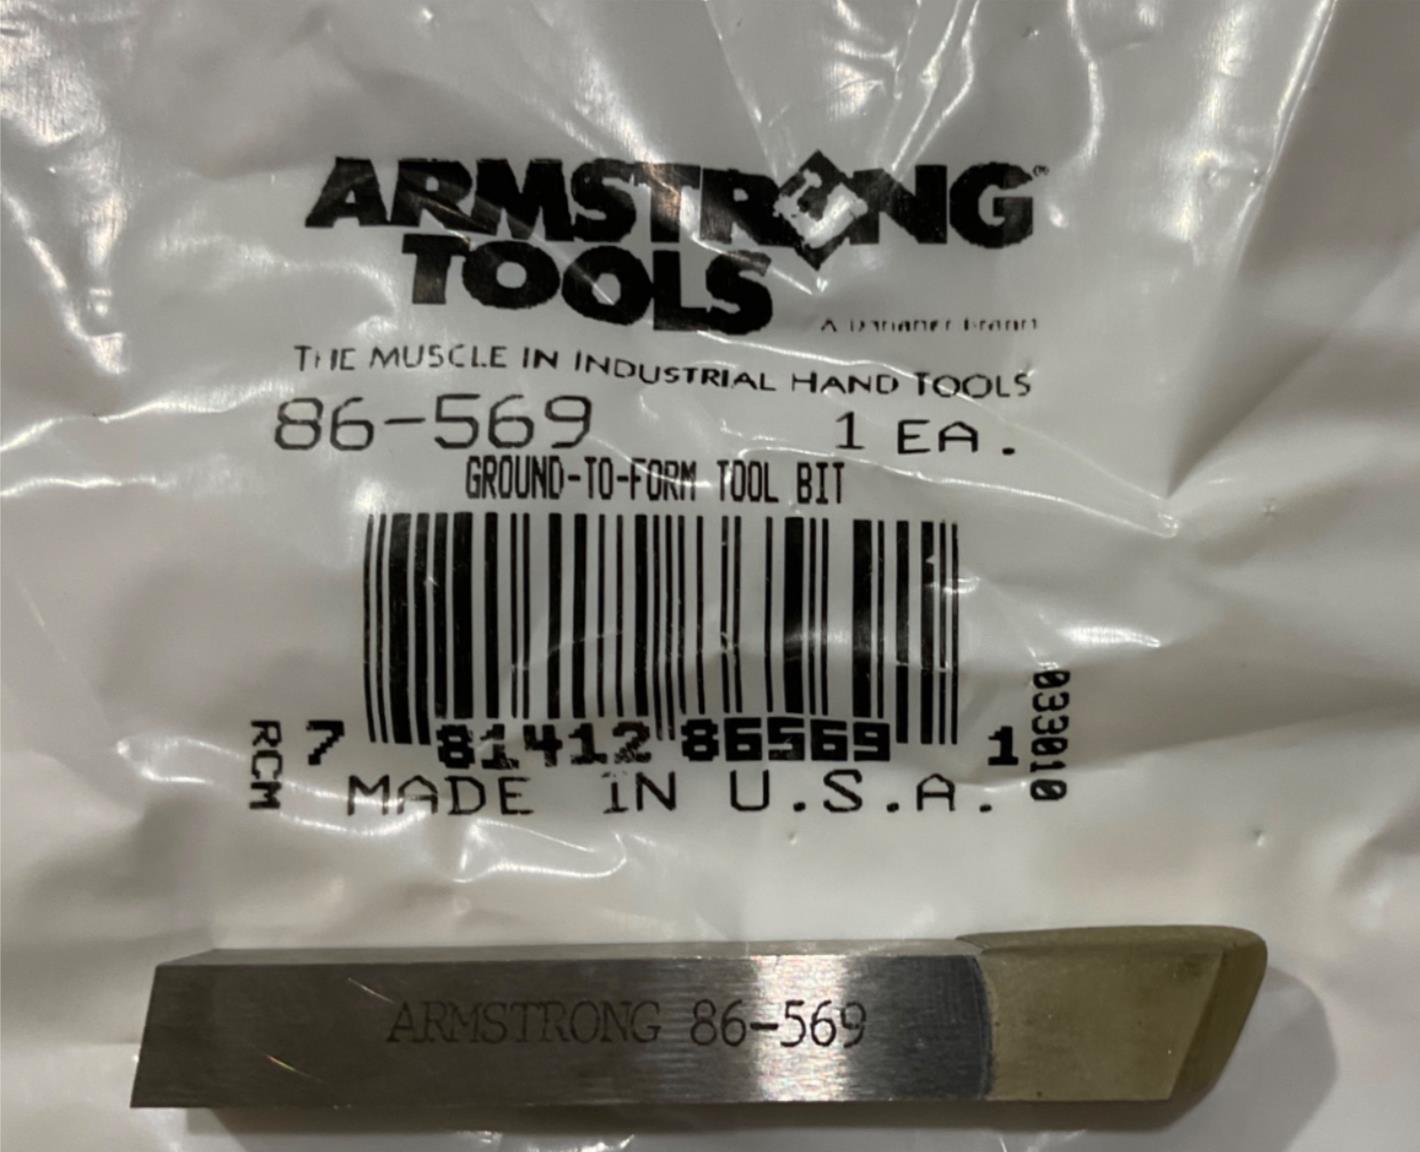 Armstrong 86-569 Ground-to-form Tool Bit USA